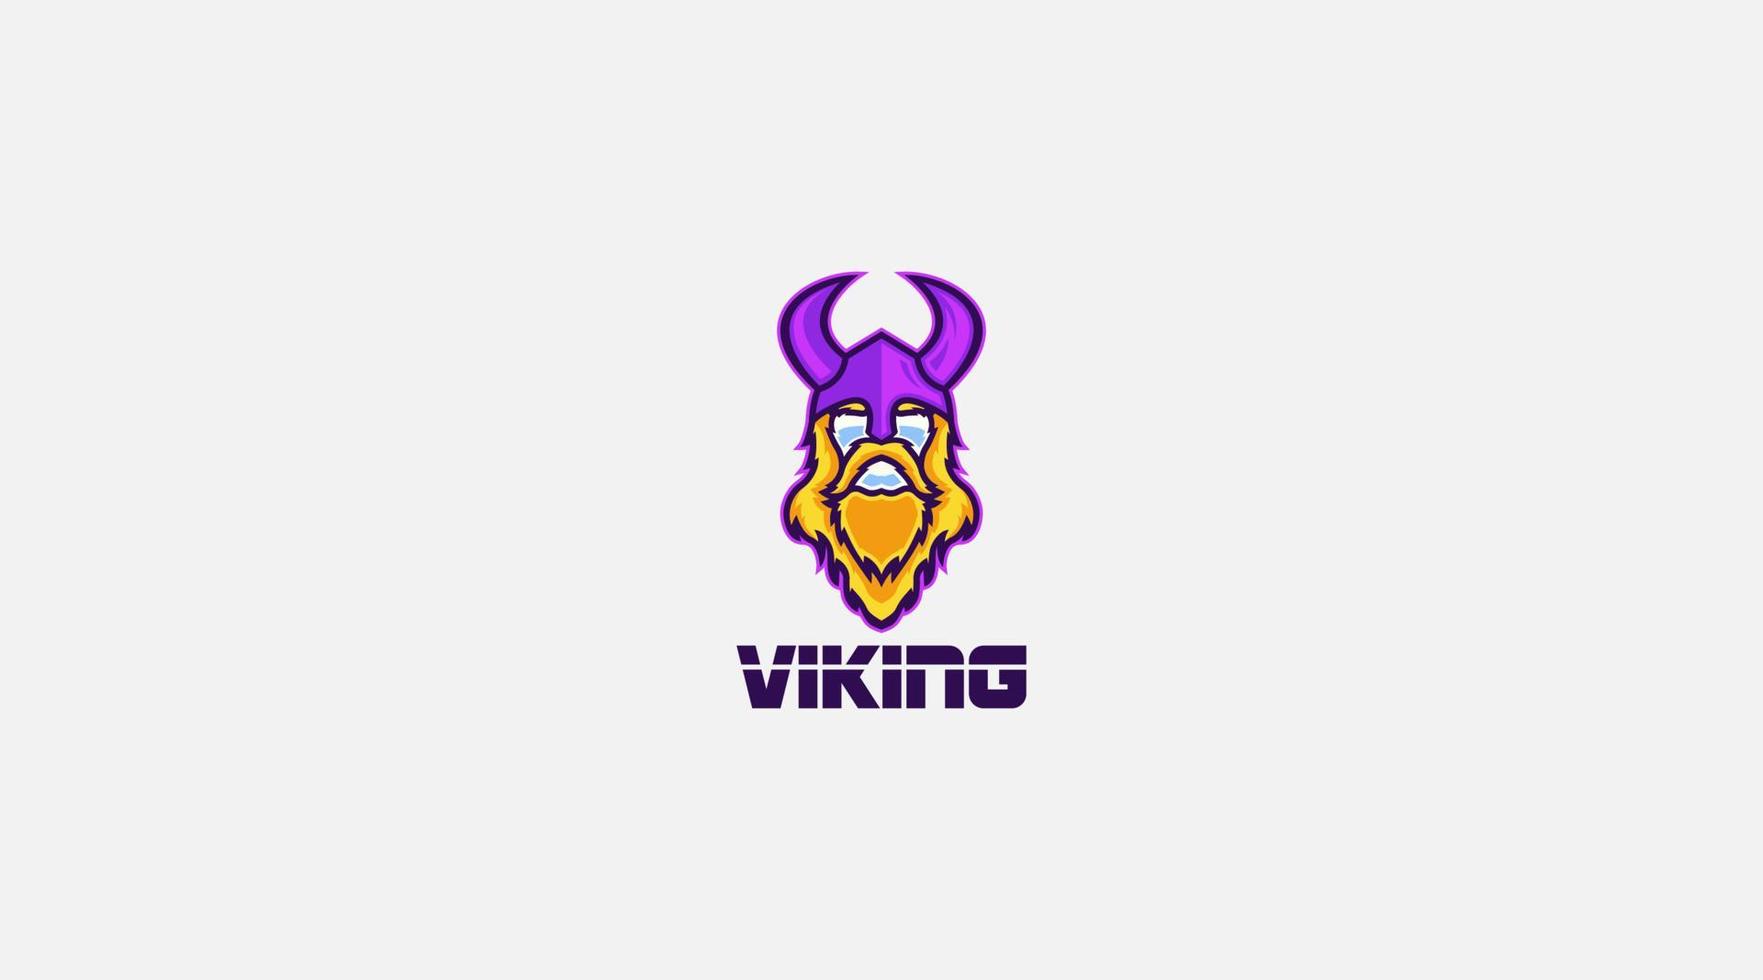 Viking vector logo design illustration symbol